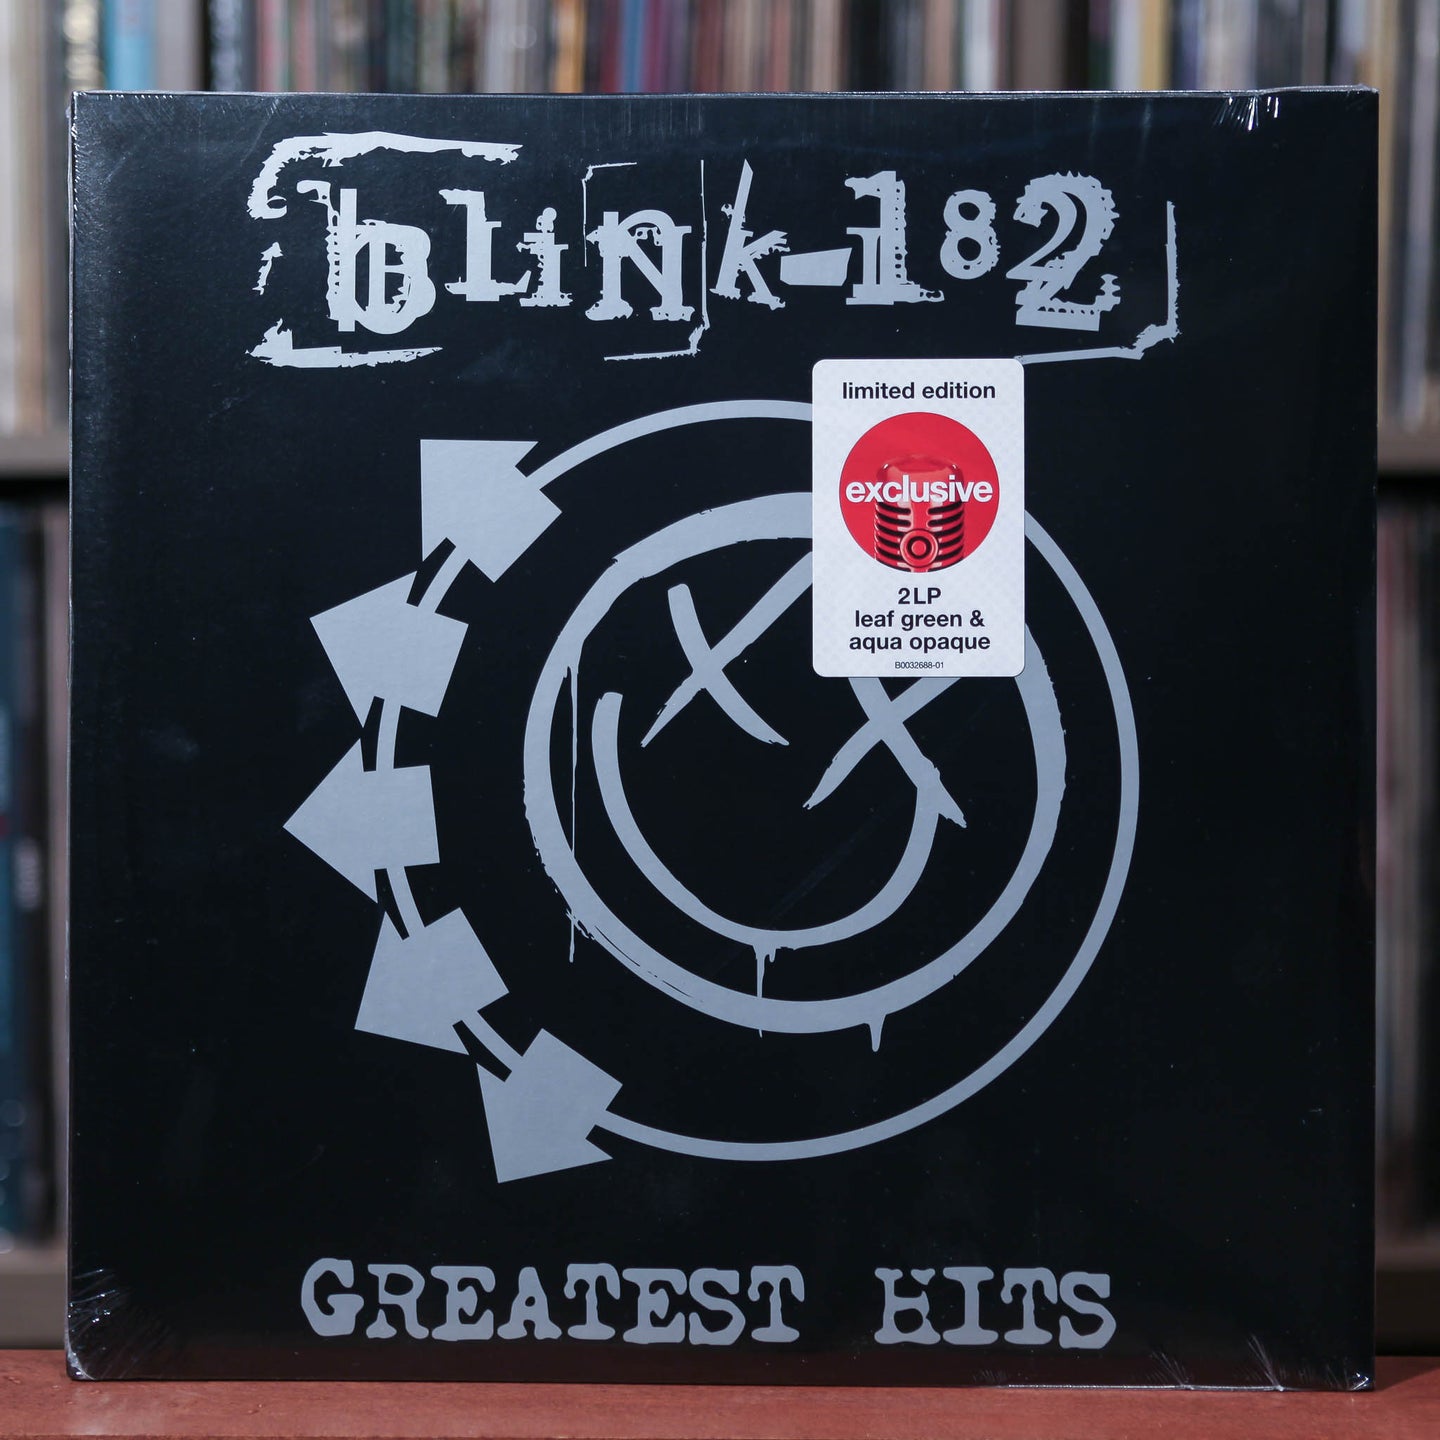 Blink-182 - Greatest Hits - 2LP - 2020 Geffen, SEALED